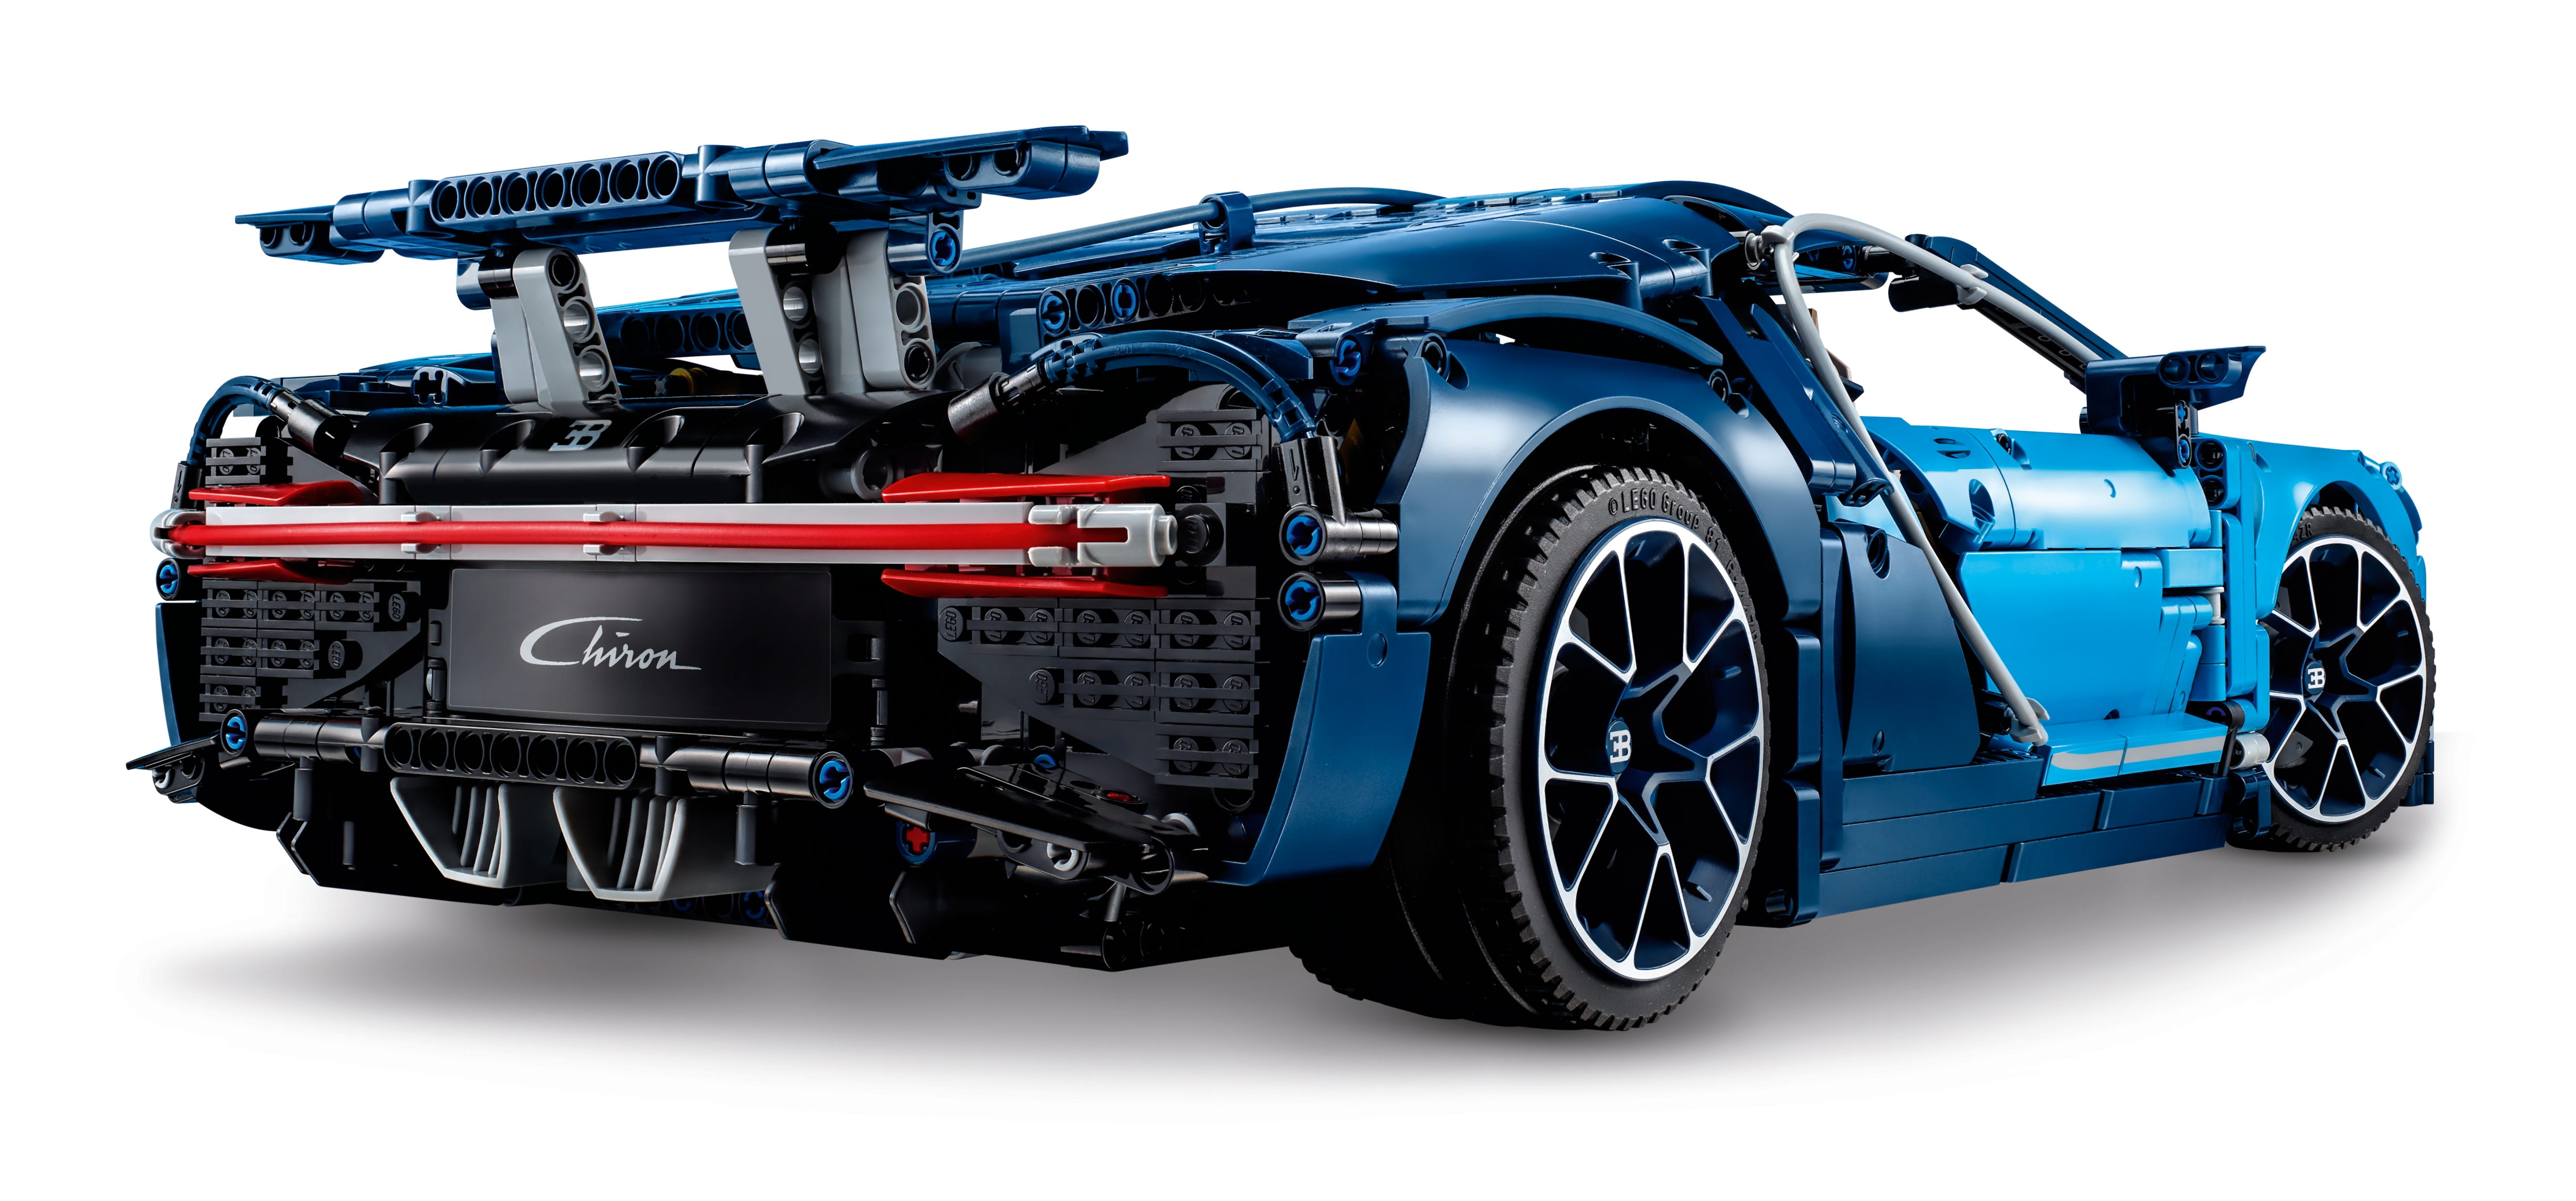 LEGO Technic Bugatti Chiron 42083 LEGO